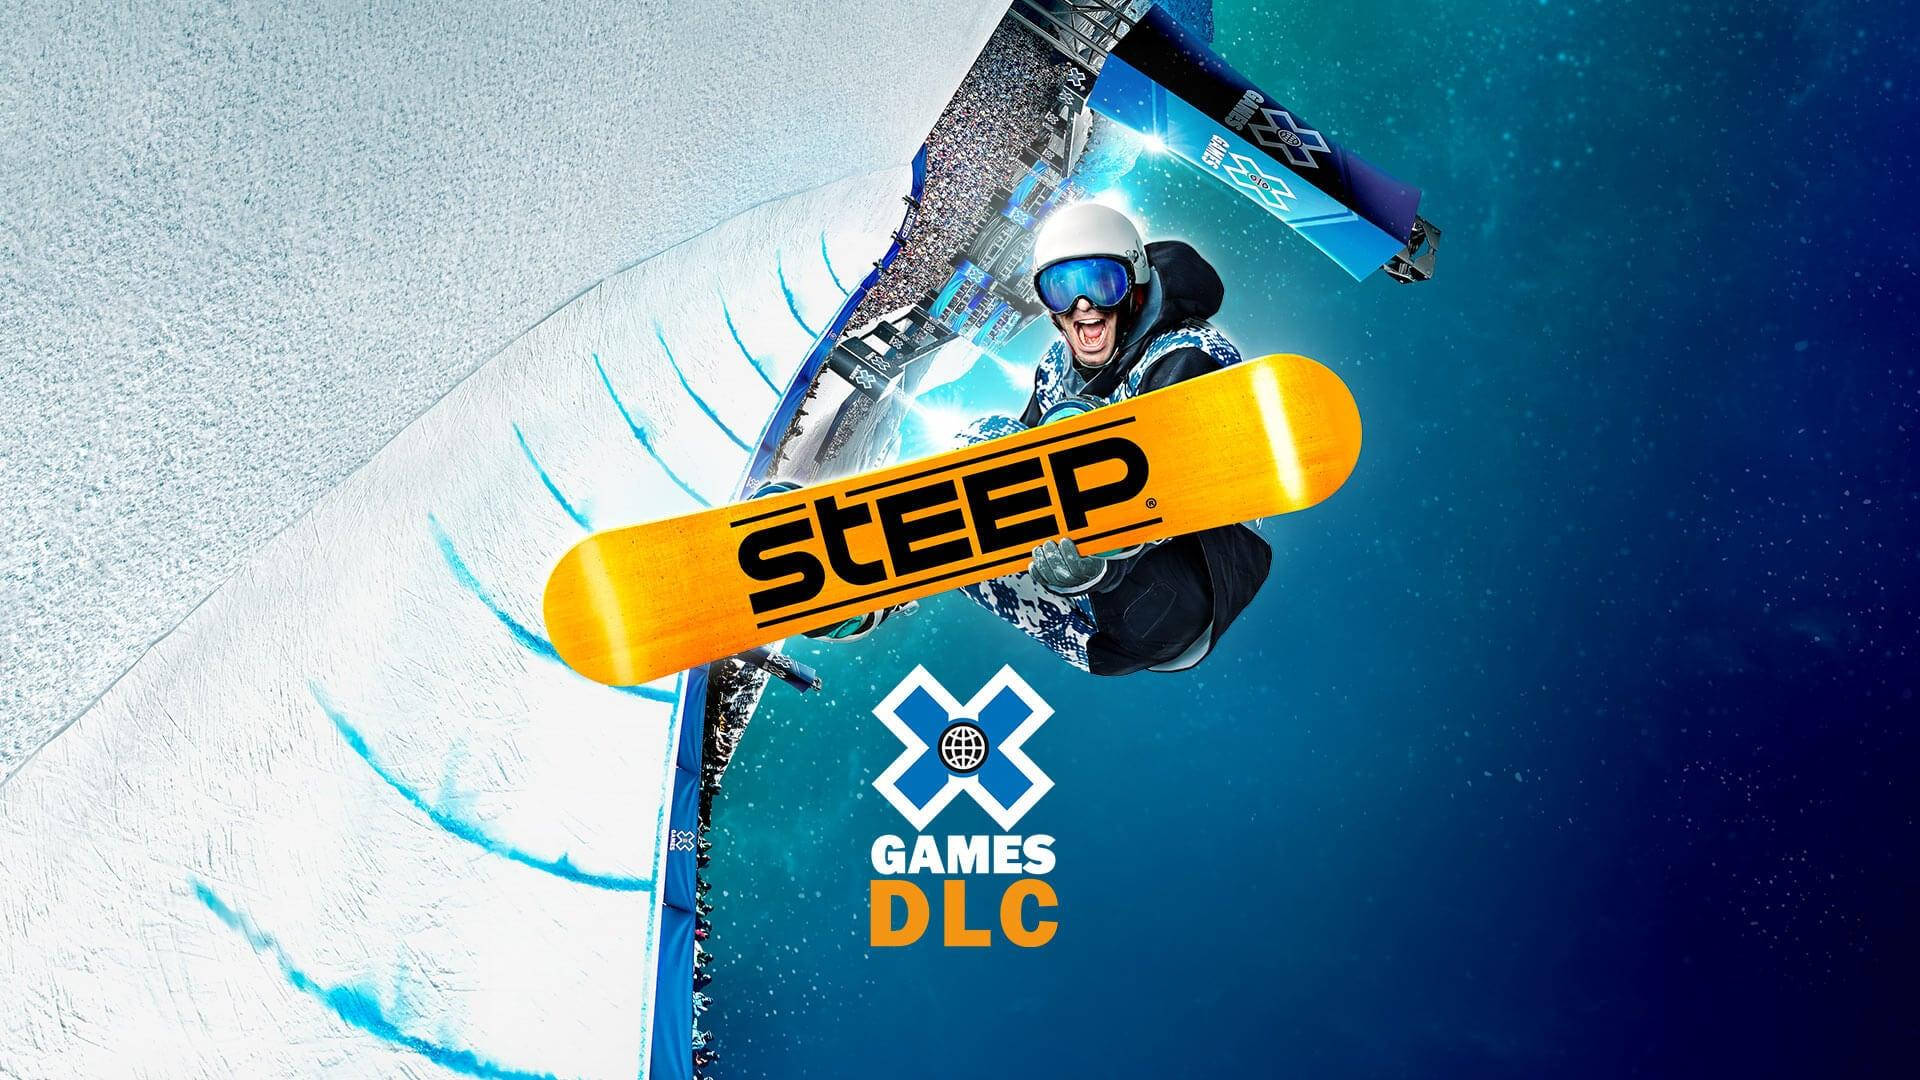 Steep X Games Dlc Cover Wallpaper